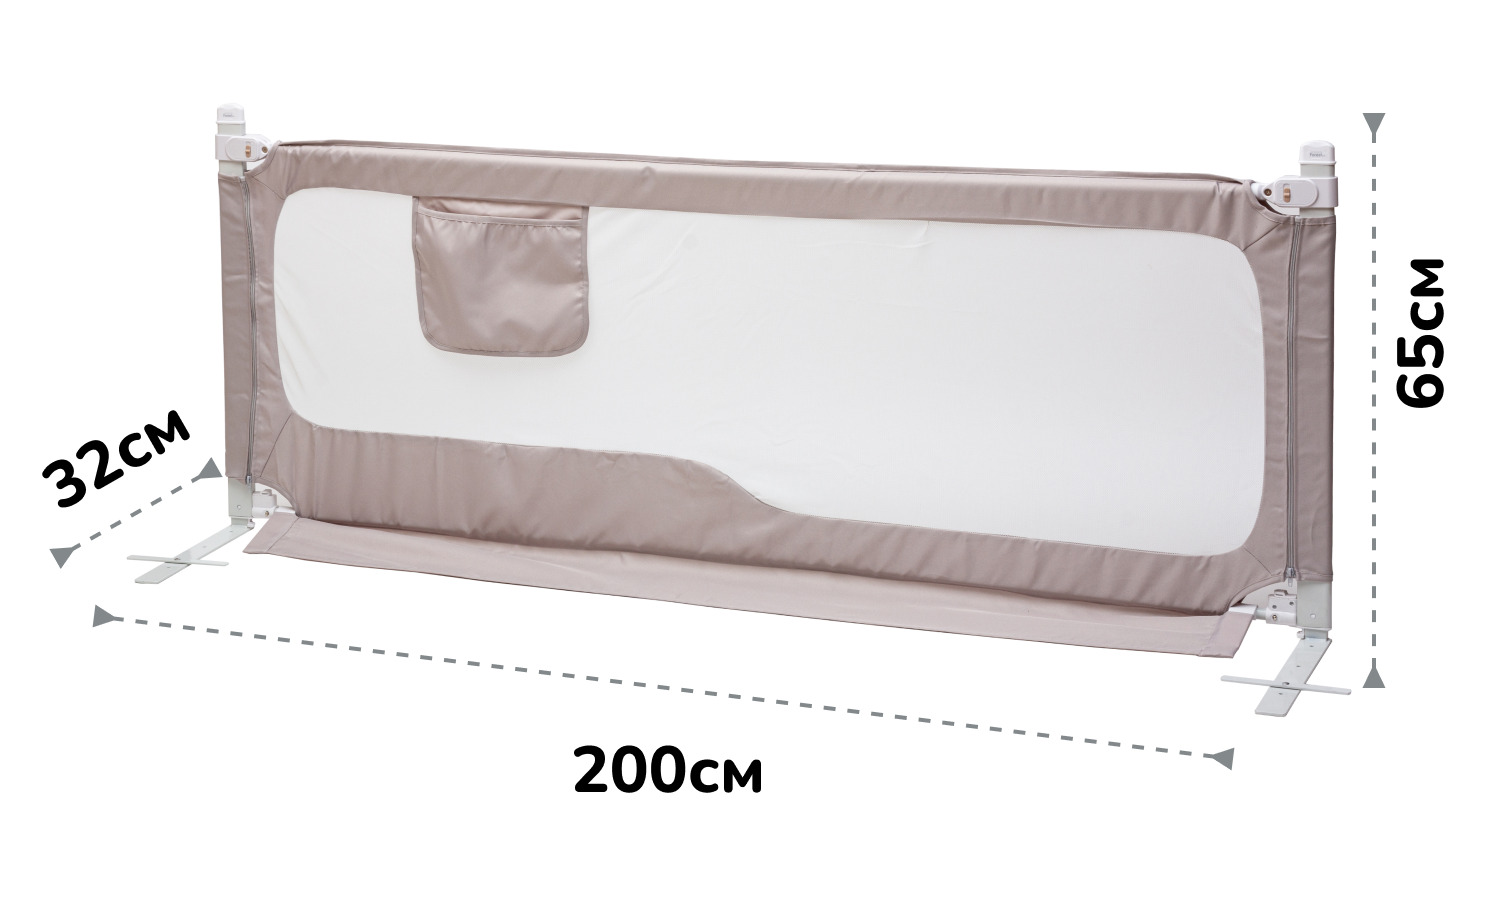 Форест кидс барьер для кровати 2 м